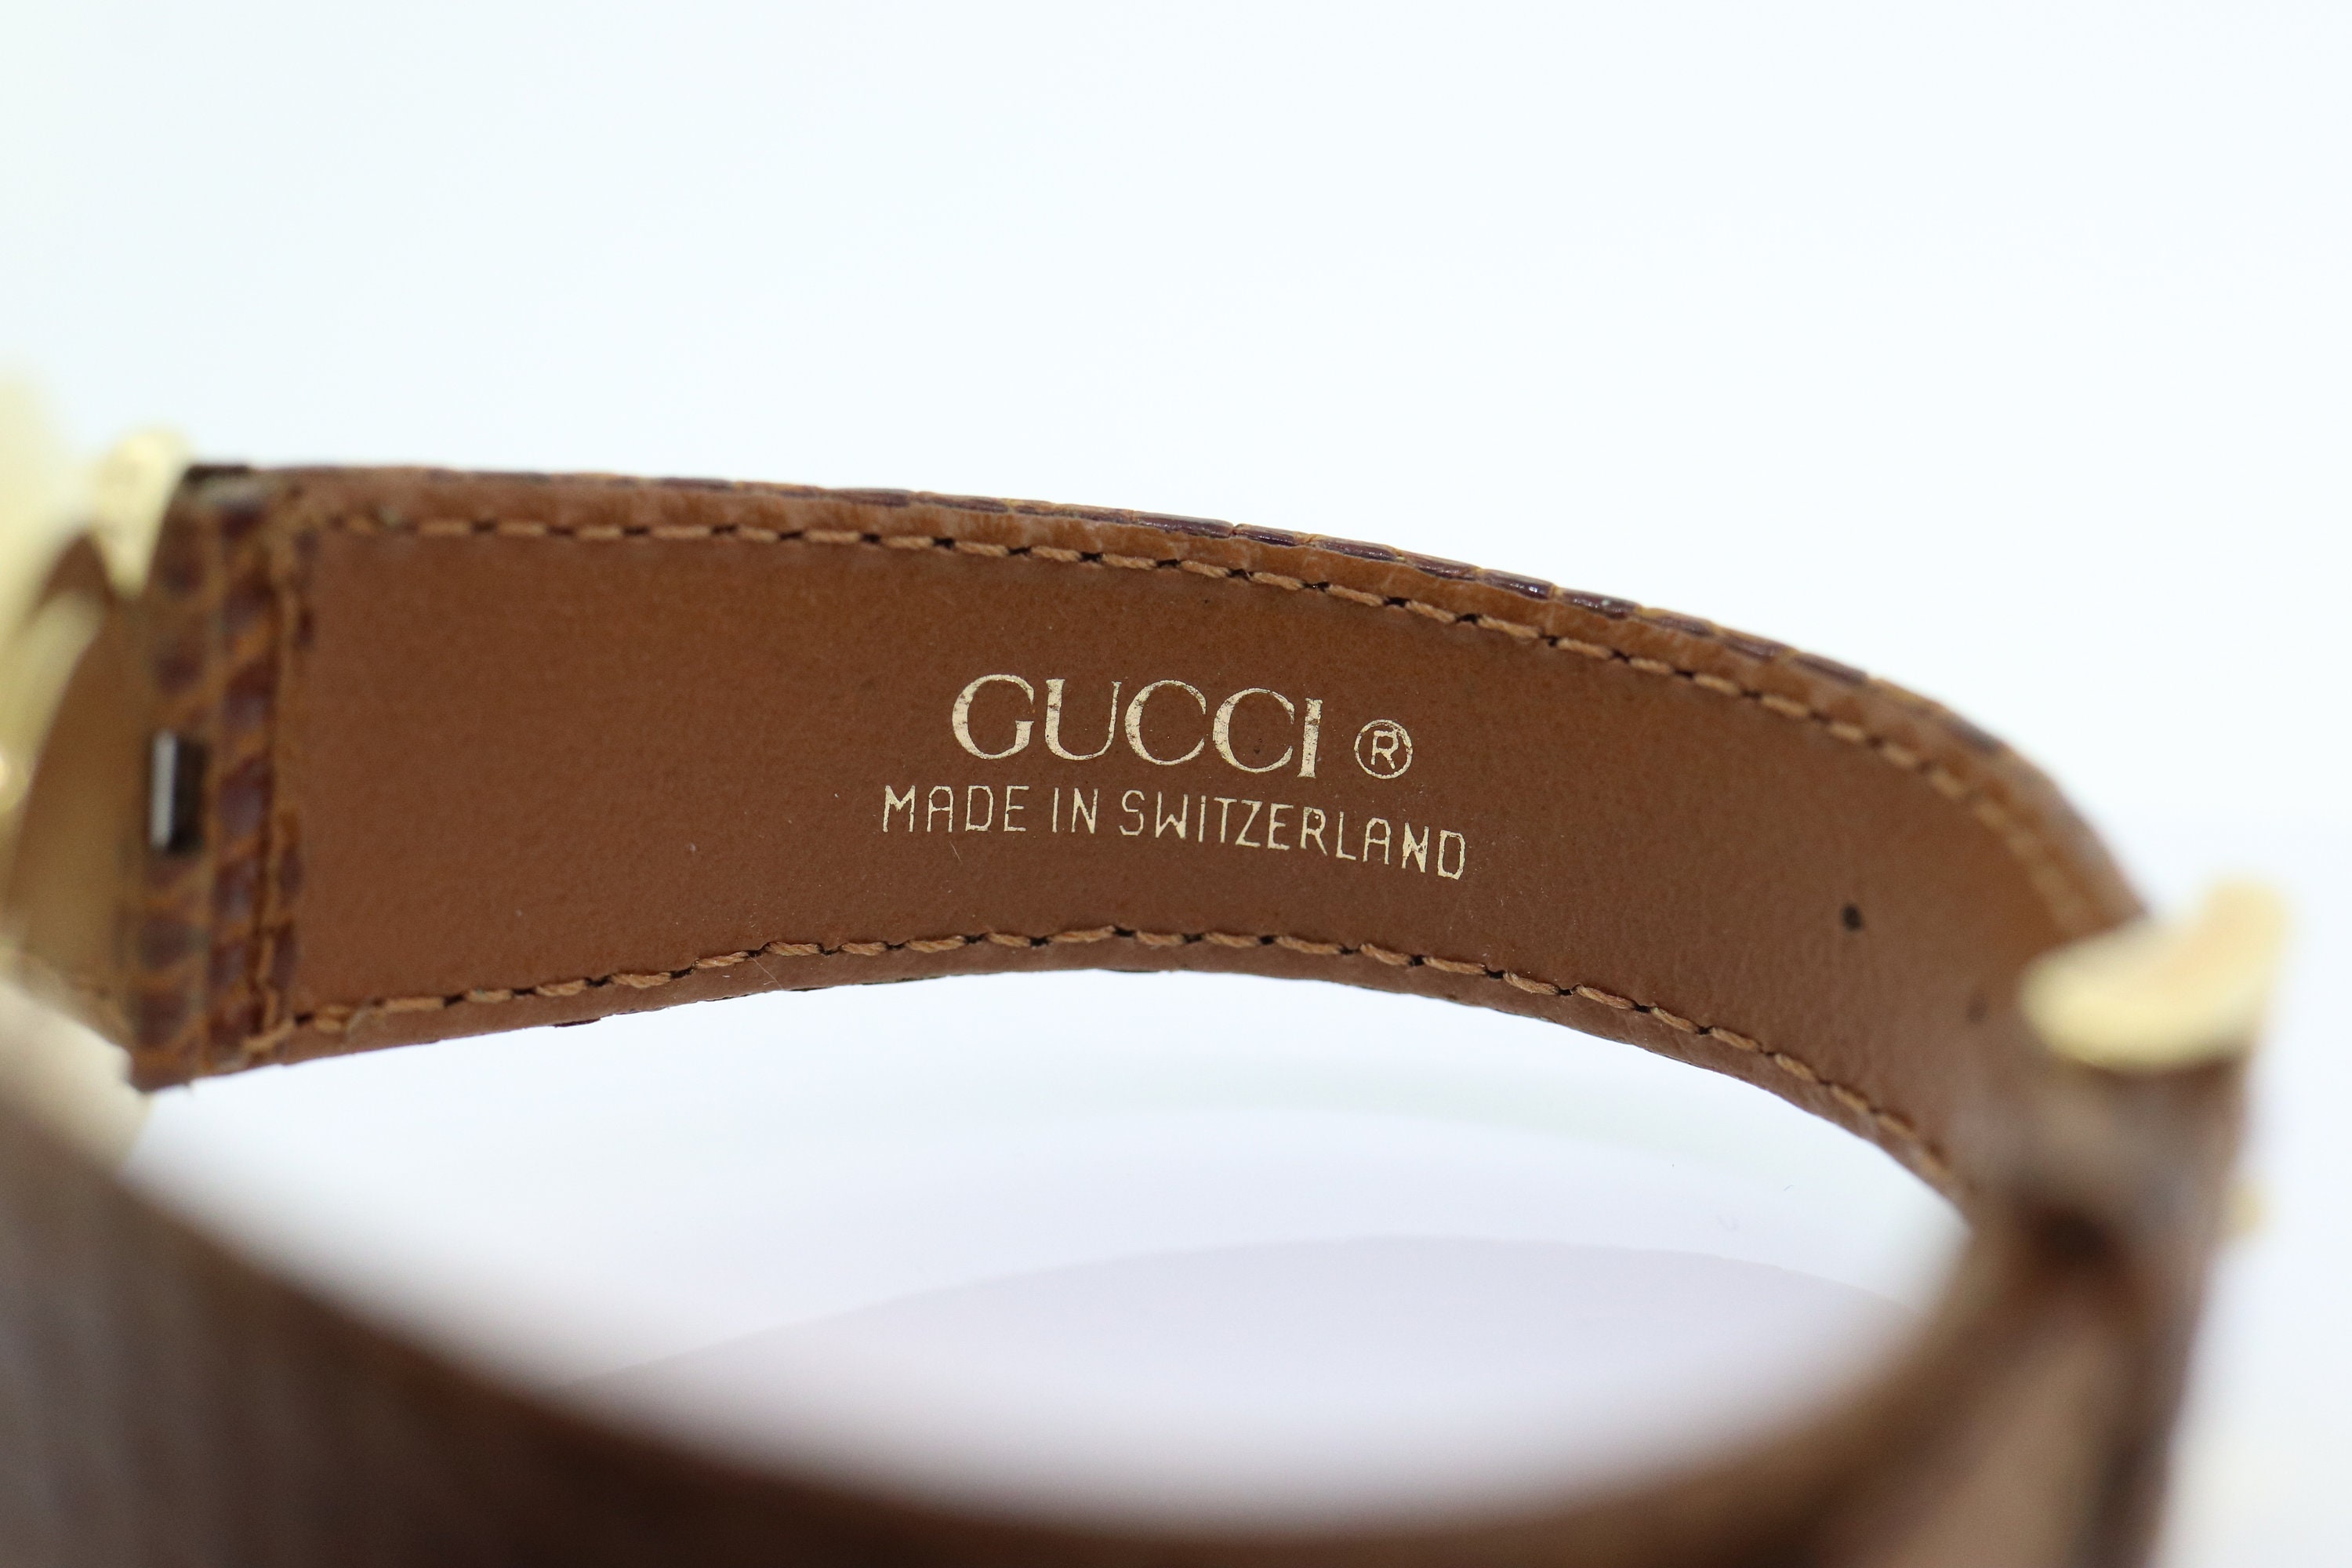 Gucci: Made in Switzerland